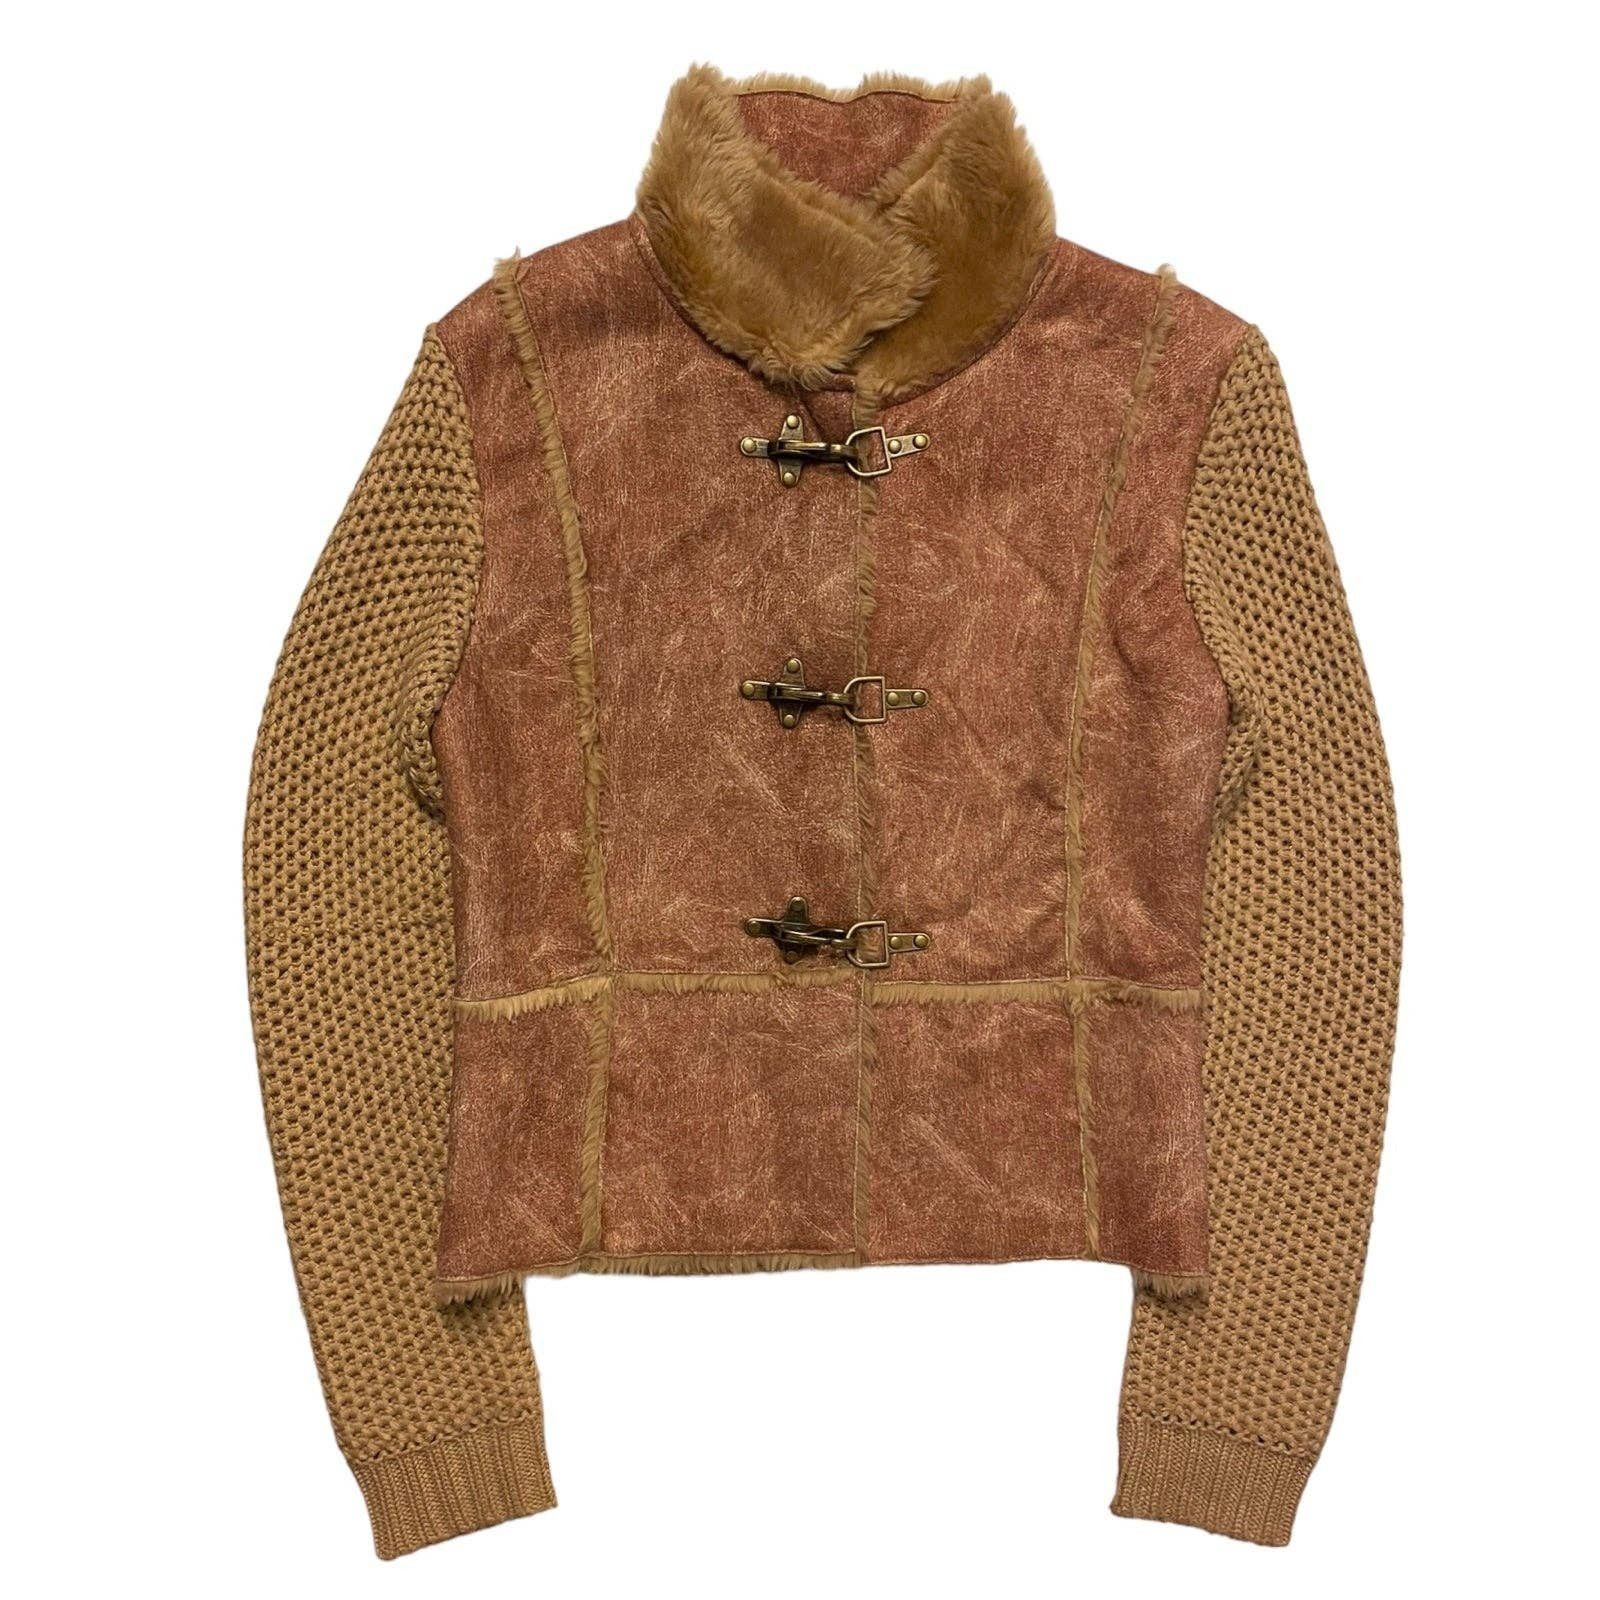 Vintage Vintage Y2K grunge faux shearling knit sweater jacket Size L Size L / US 10 / IT 46 - 2 Preview